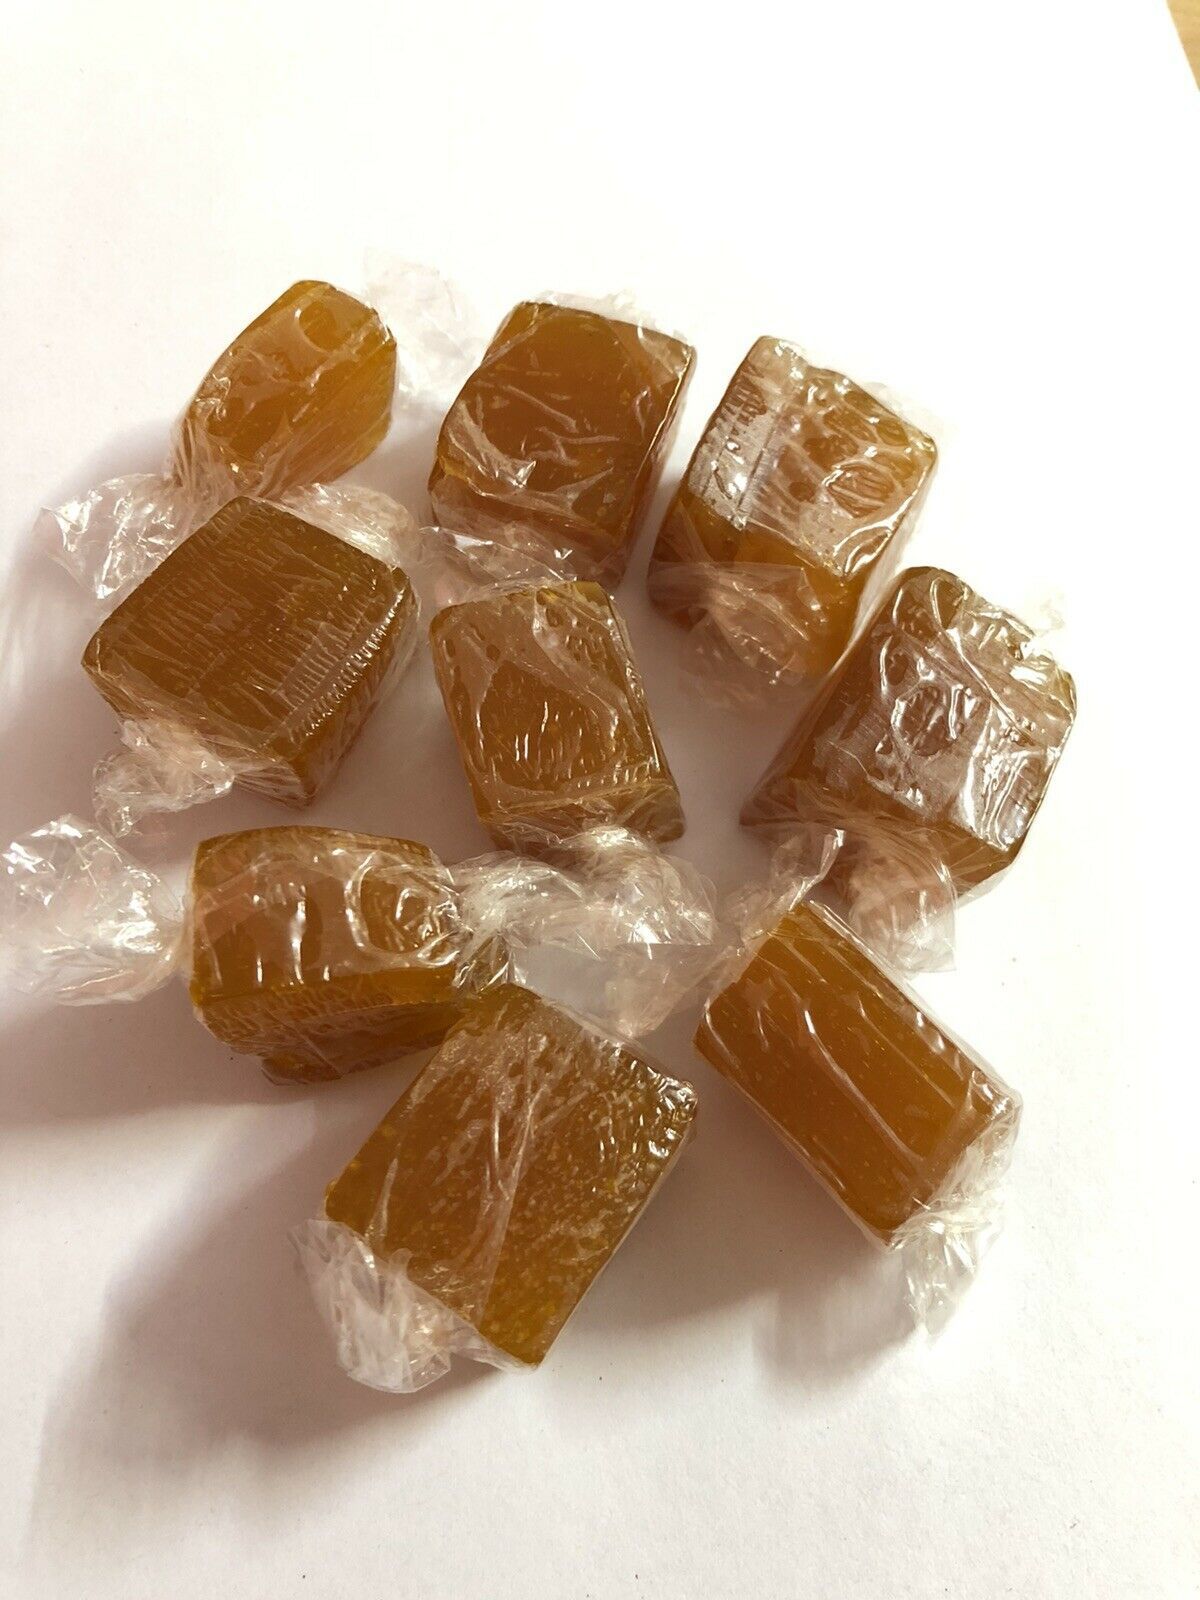 500 GRAMS Indian Mukhwas Mouth Freshener Mango toffee sweet AAM PAPAD FREE SHIP - $33.72